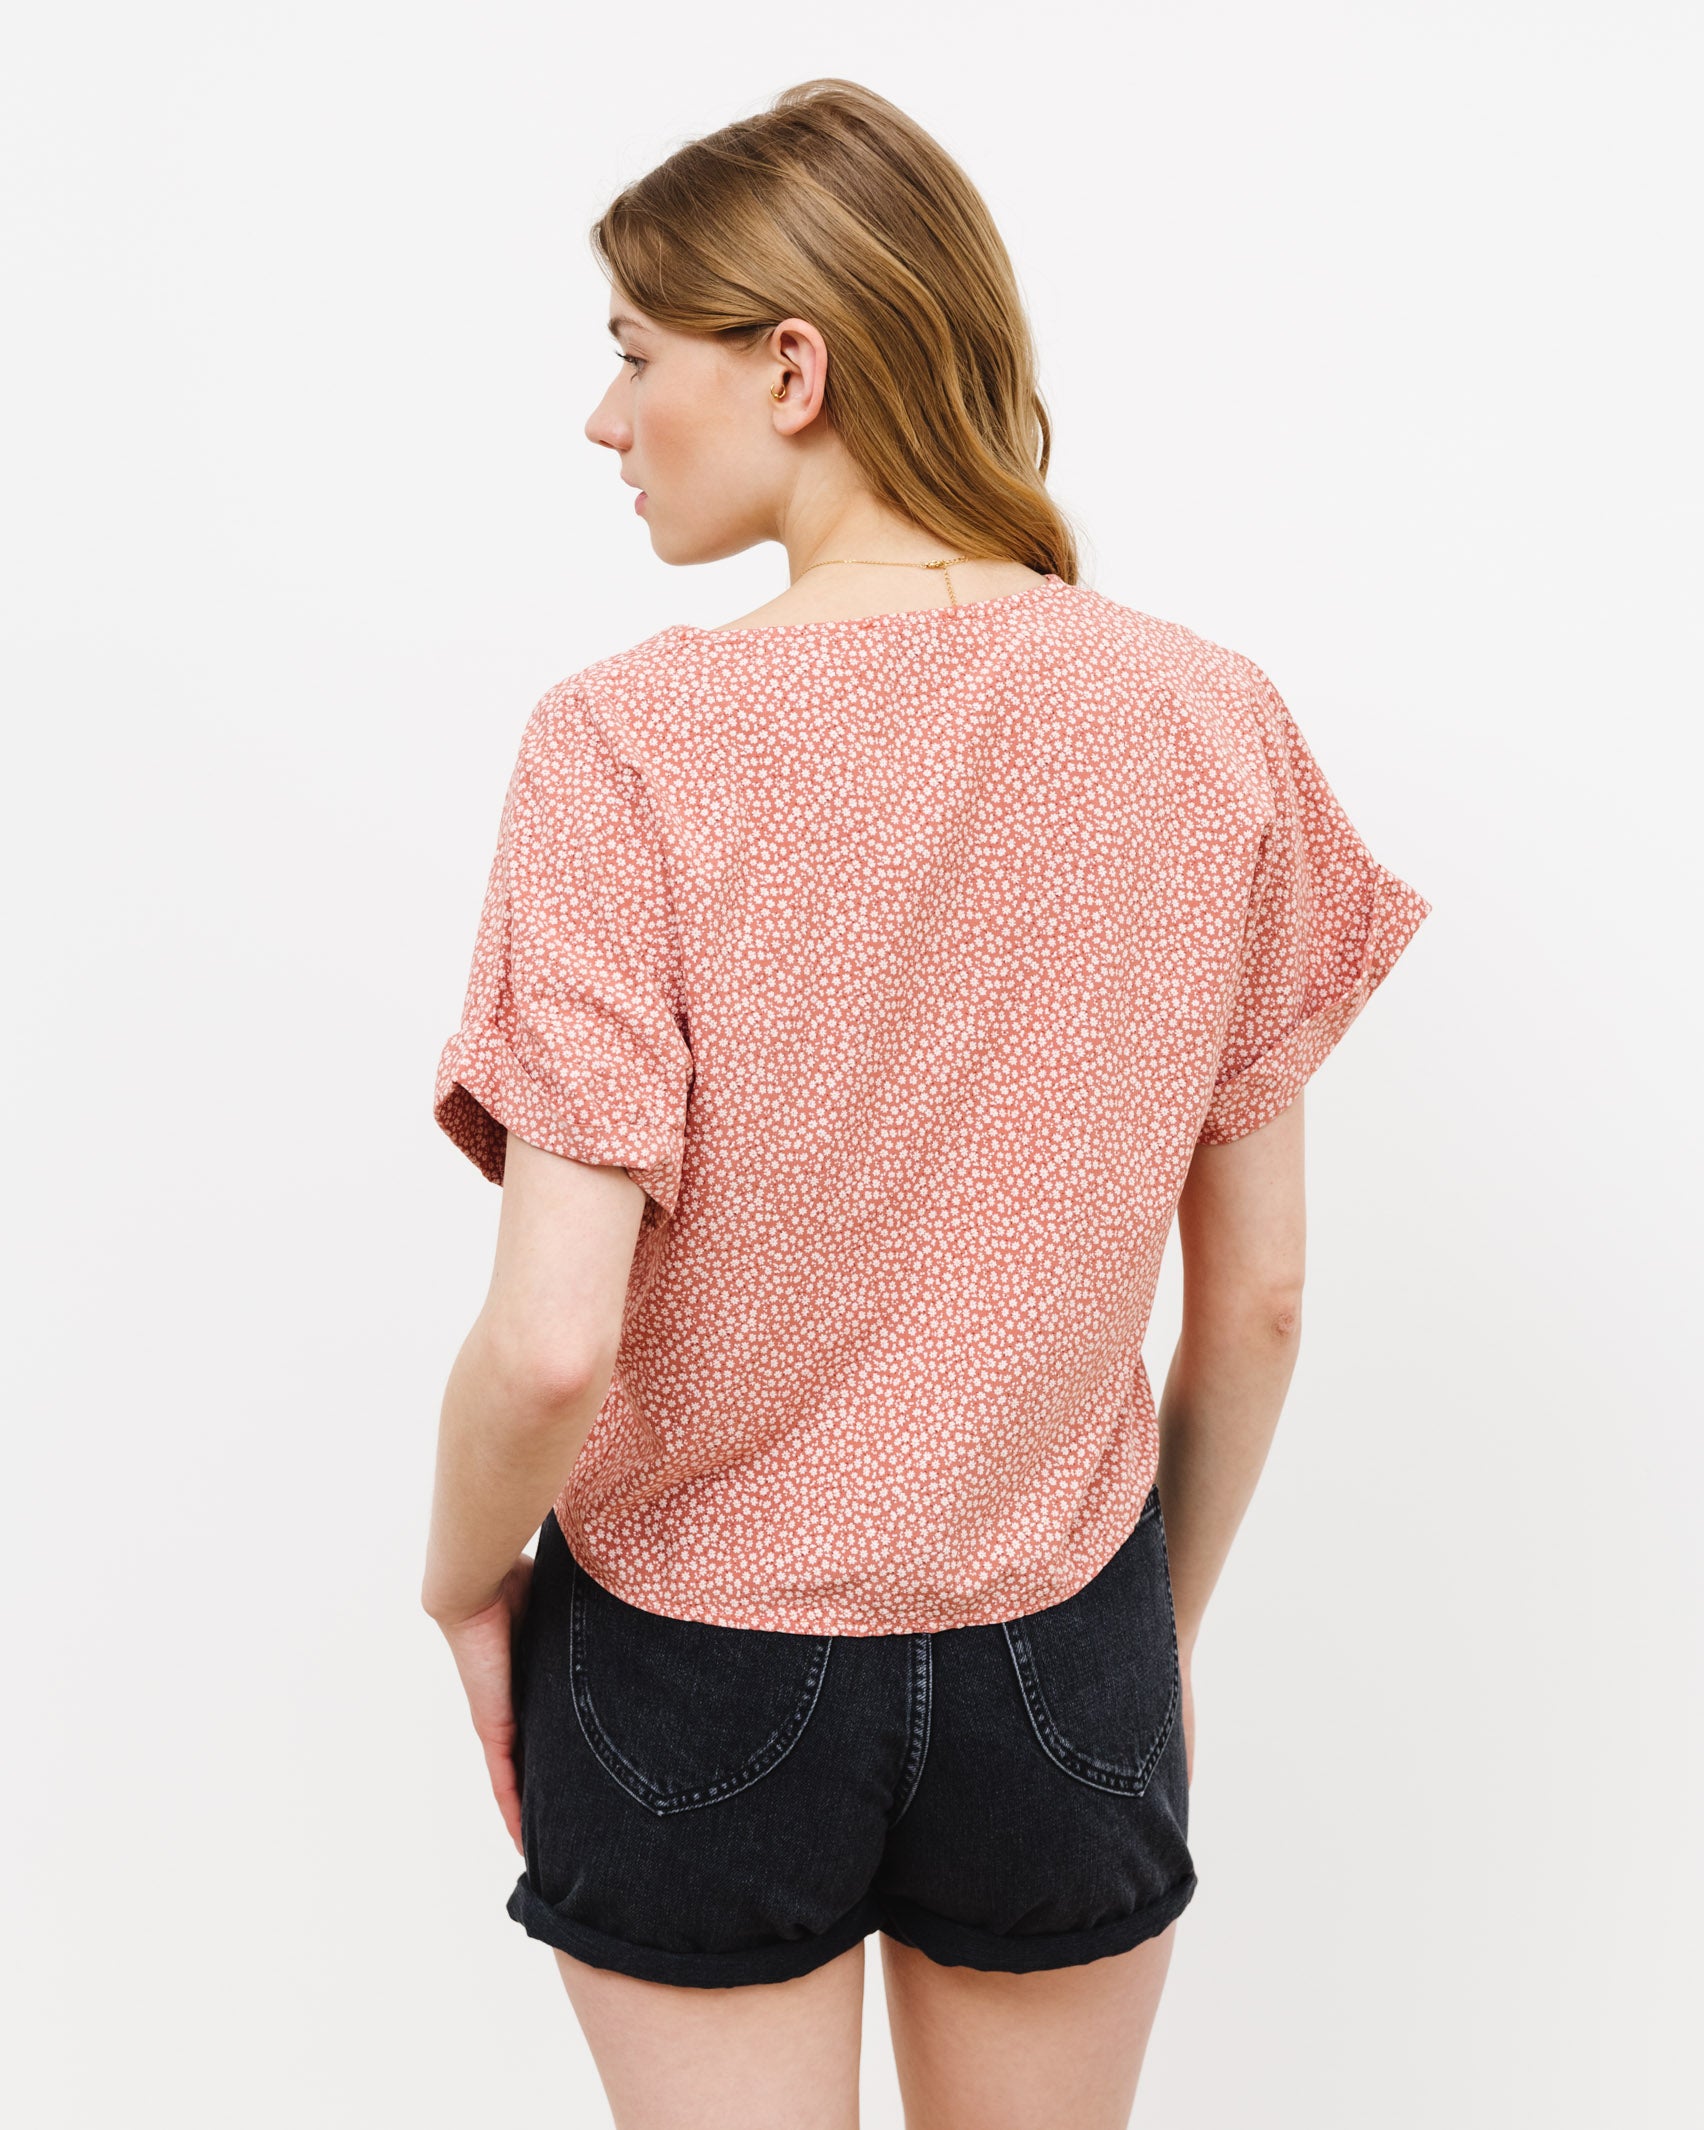 Lockere Bluse mit Knotendetail - Broke + Schön#farbe_pepe-rosa